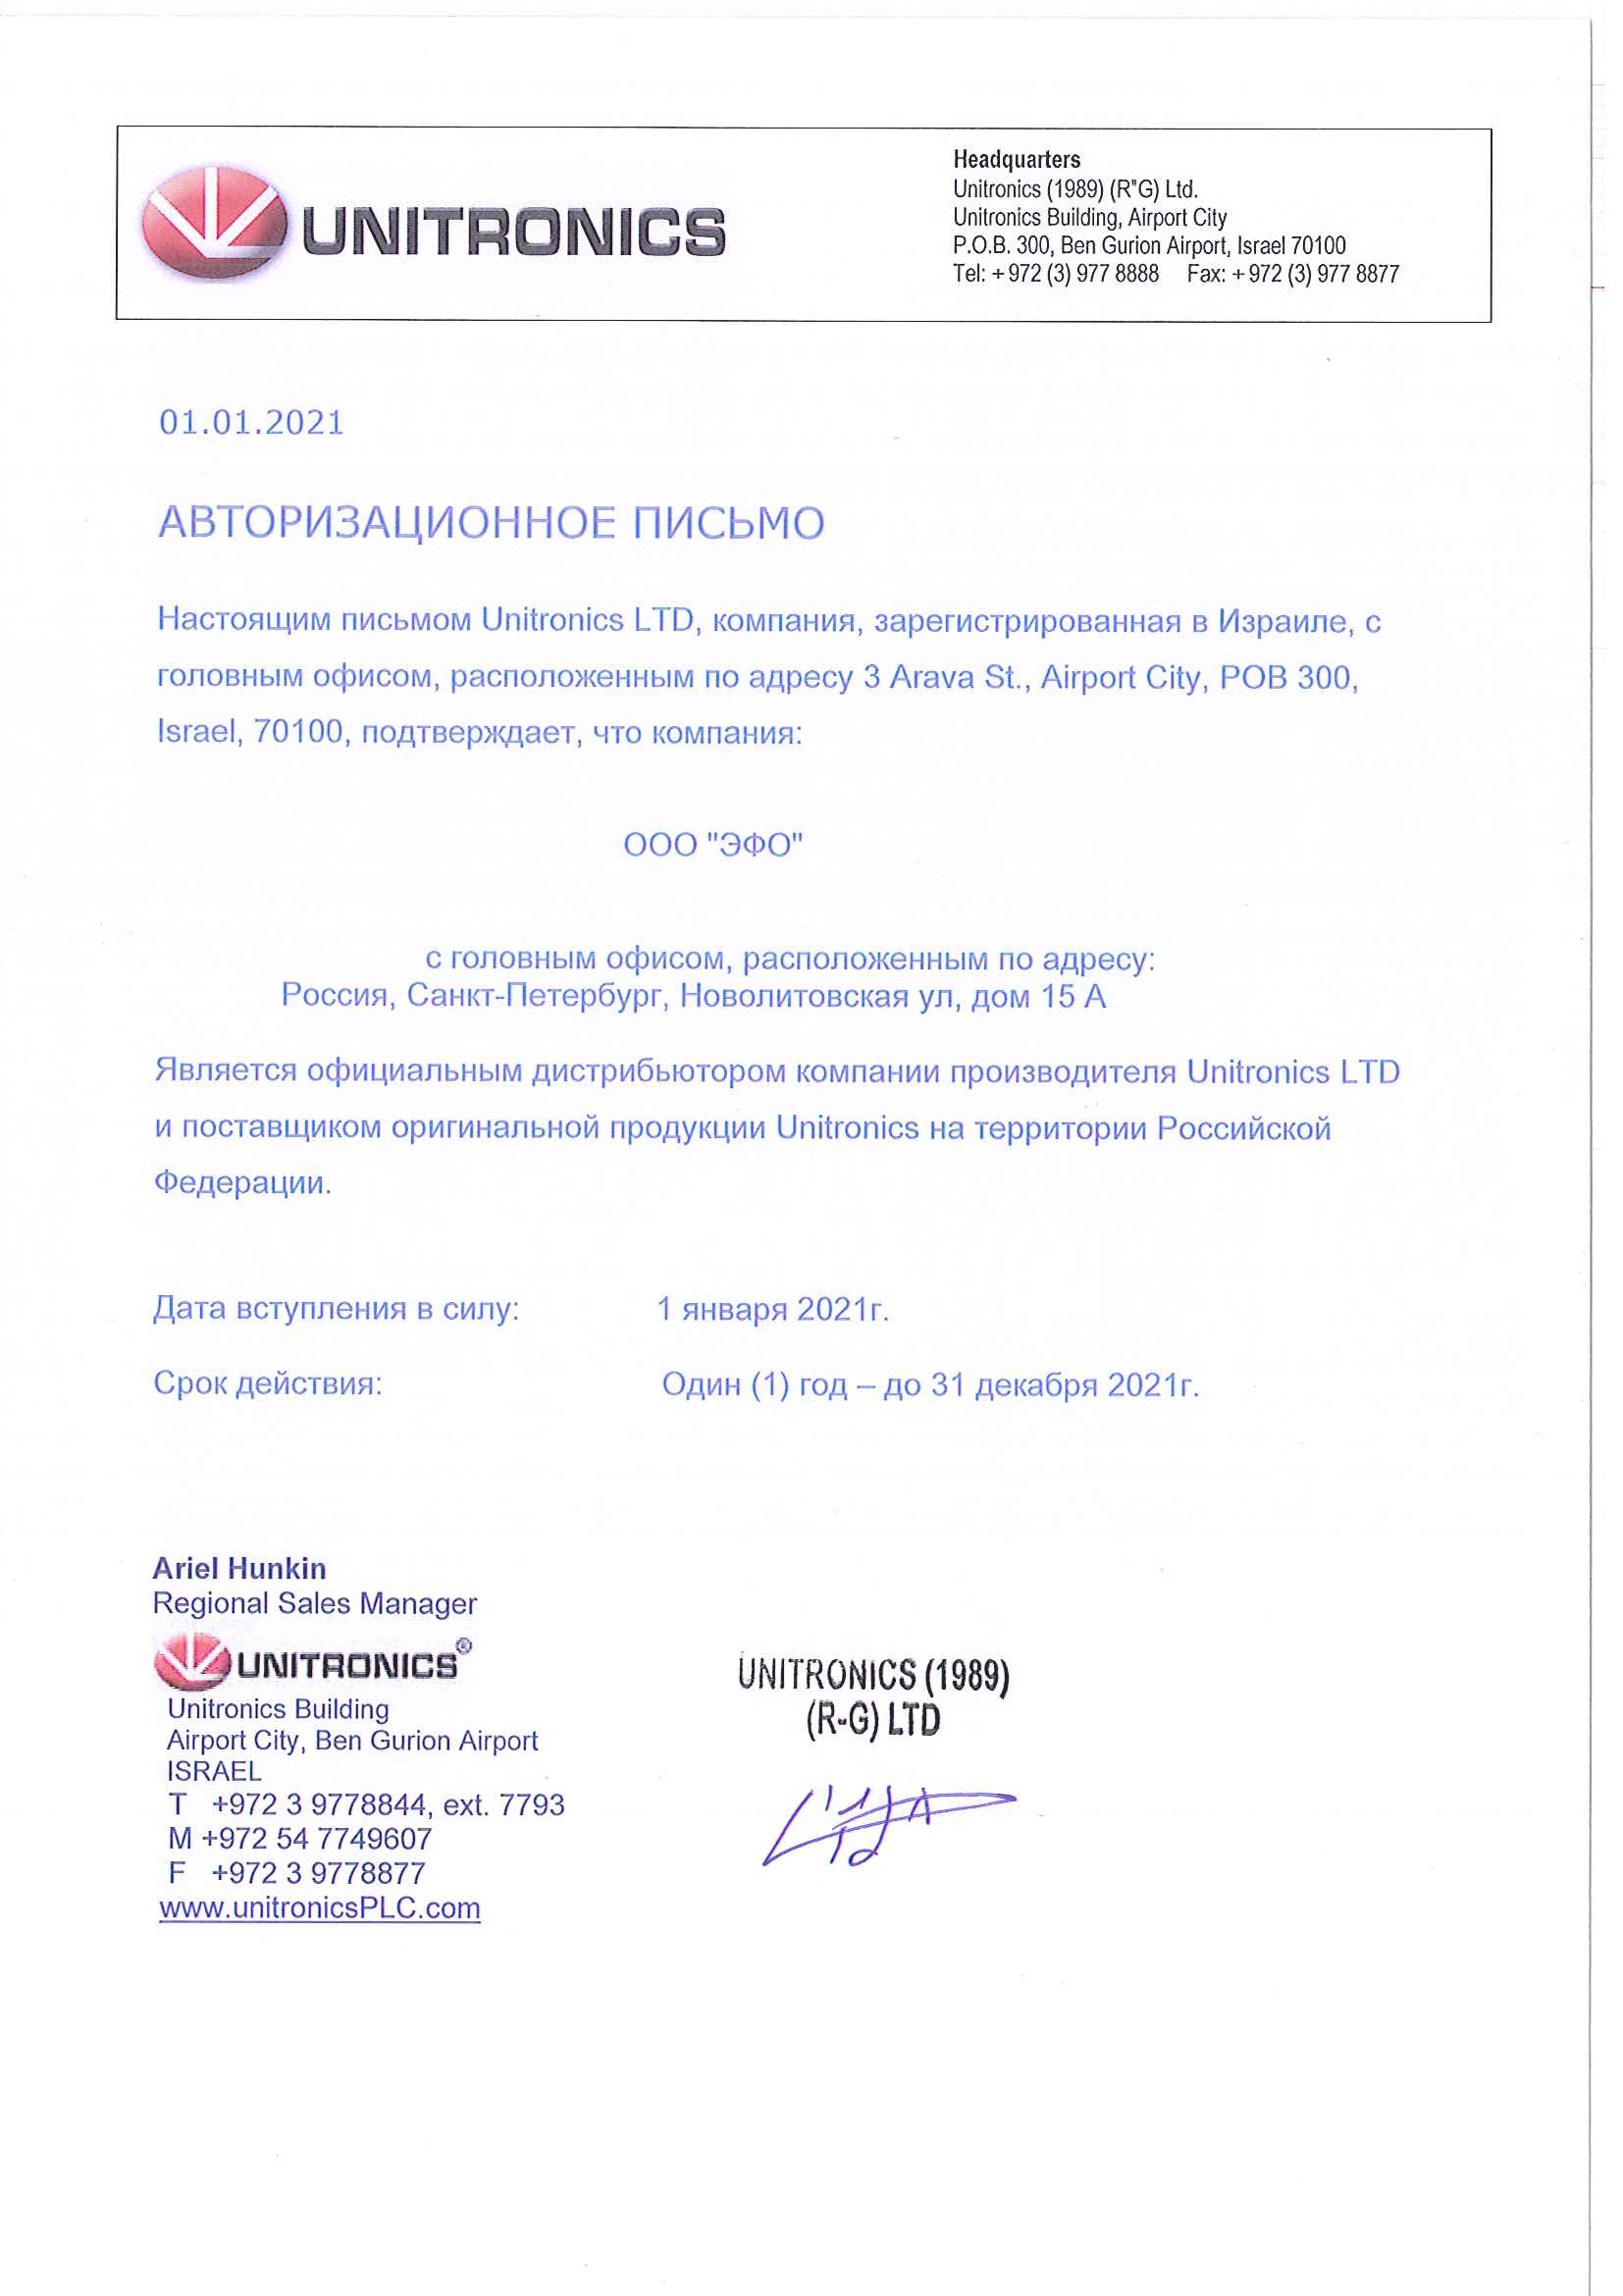 Сертификат дистрибьютора Unitronics 2021 г.